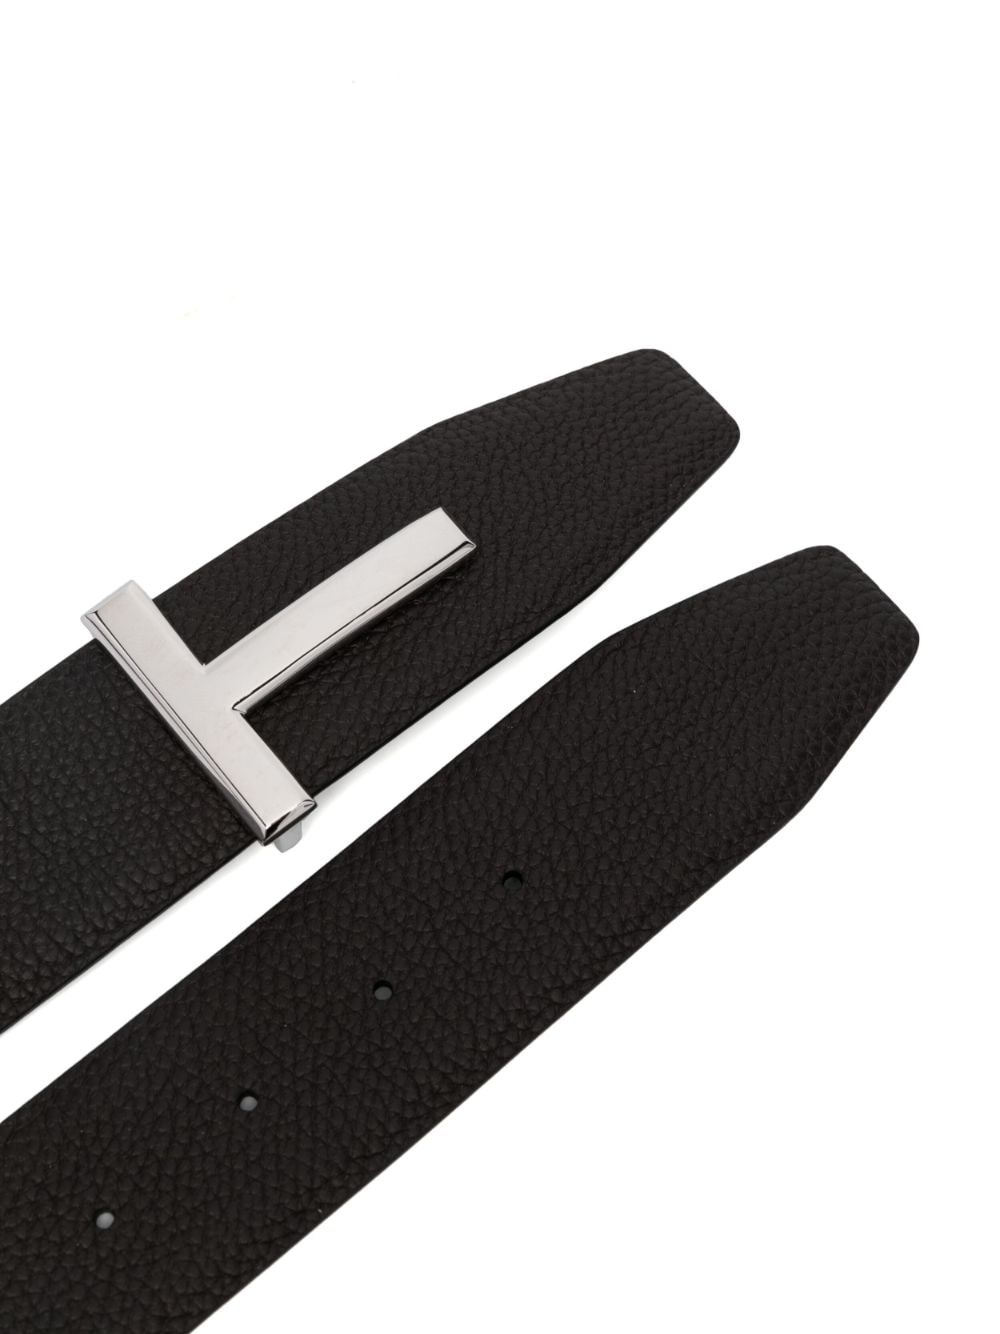 T-buckle reversible leather belt - 2